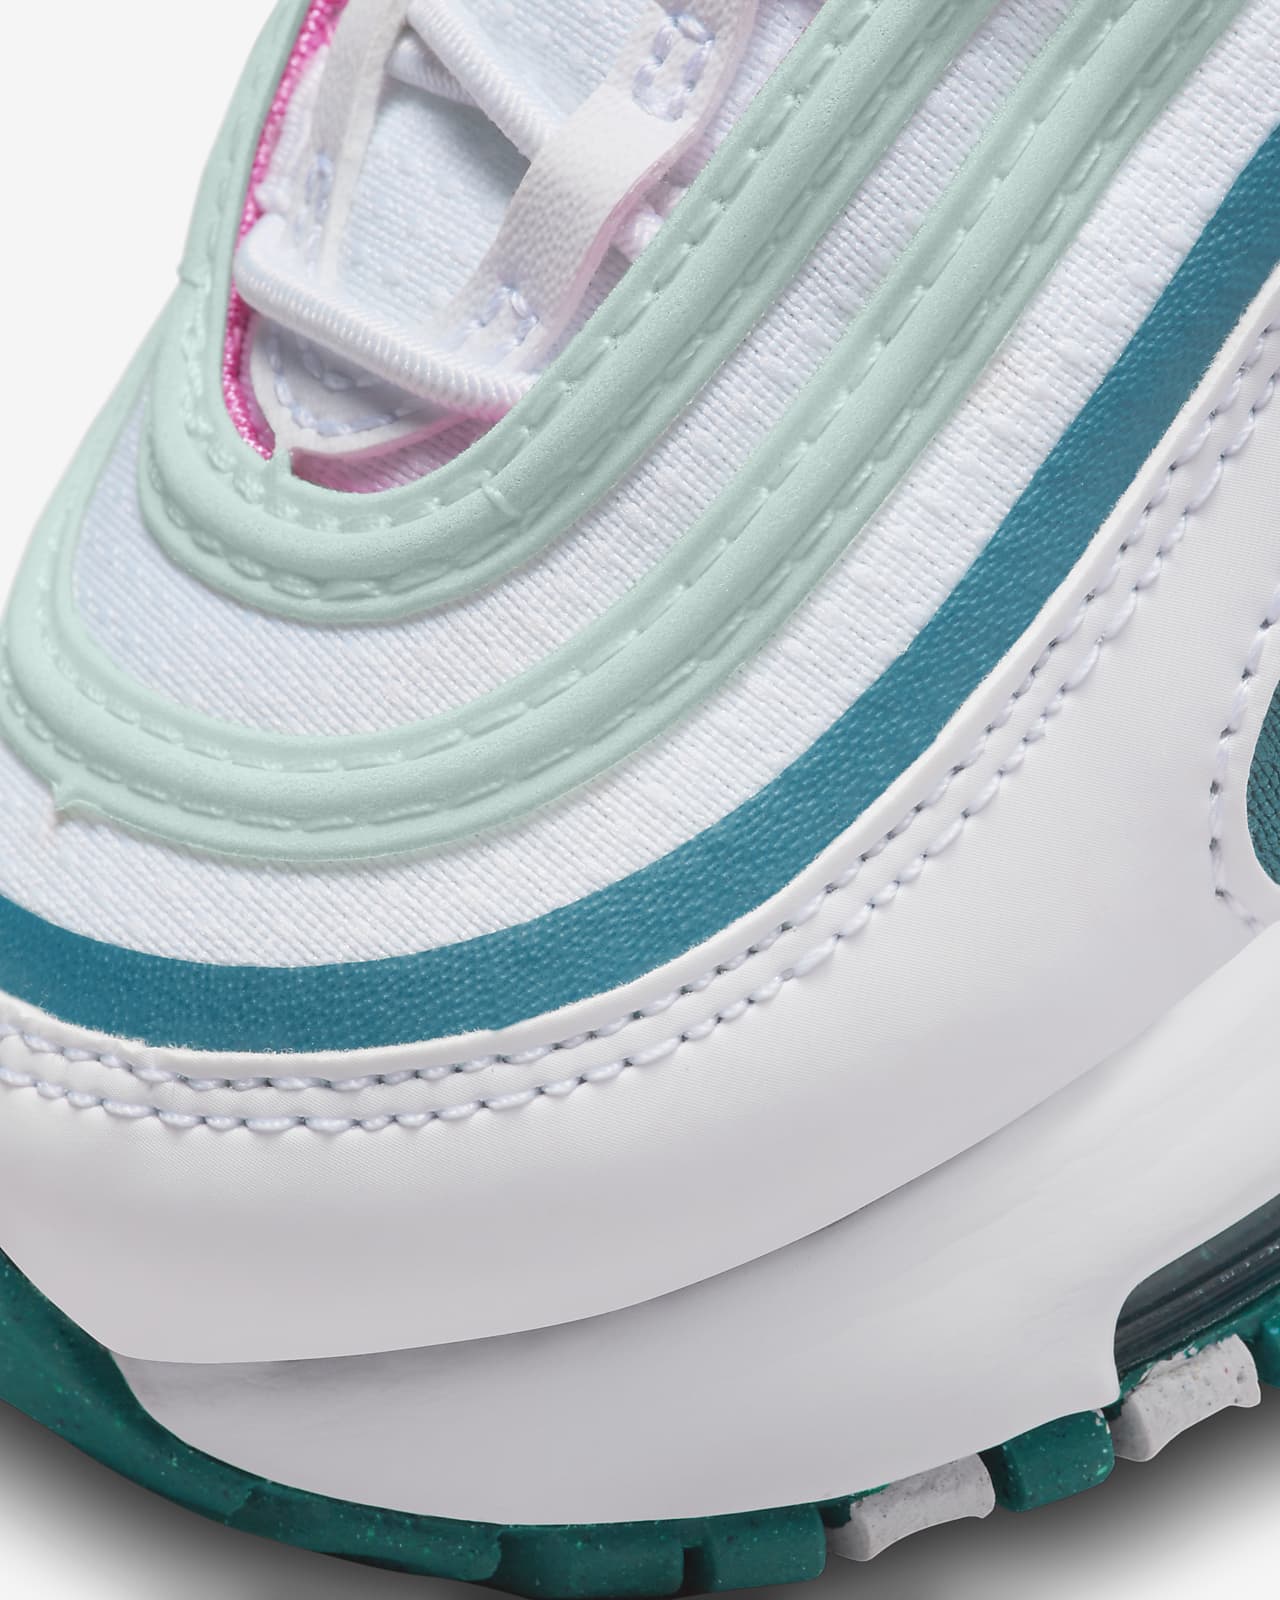 Nike Air Max 97 'Miami' White, Pink Blast & Green